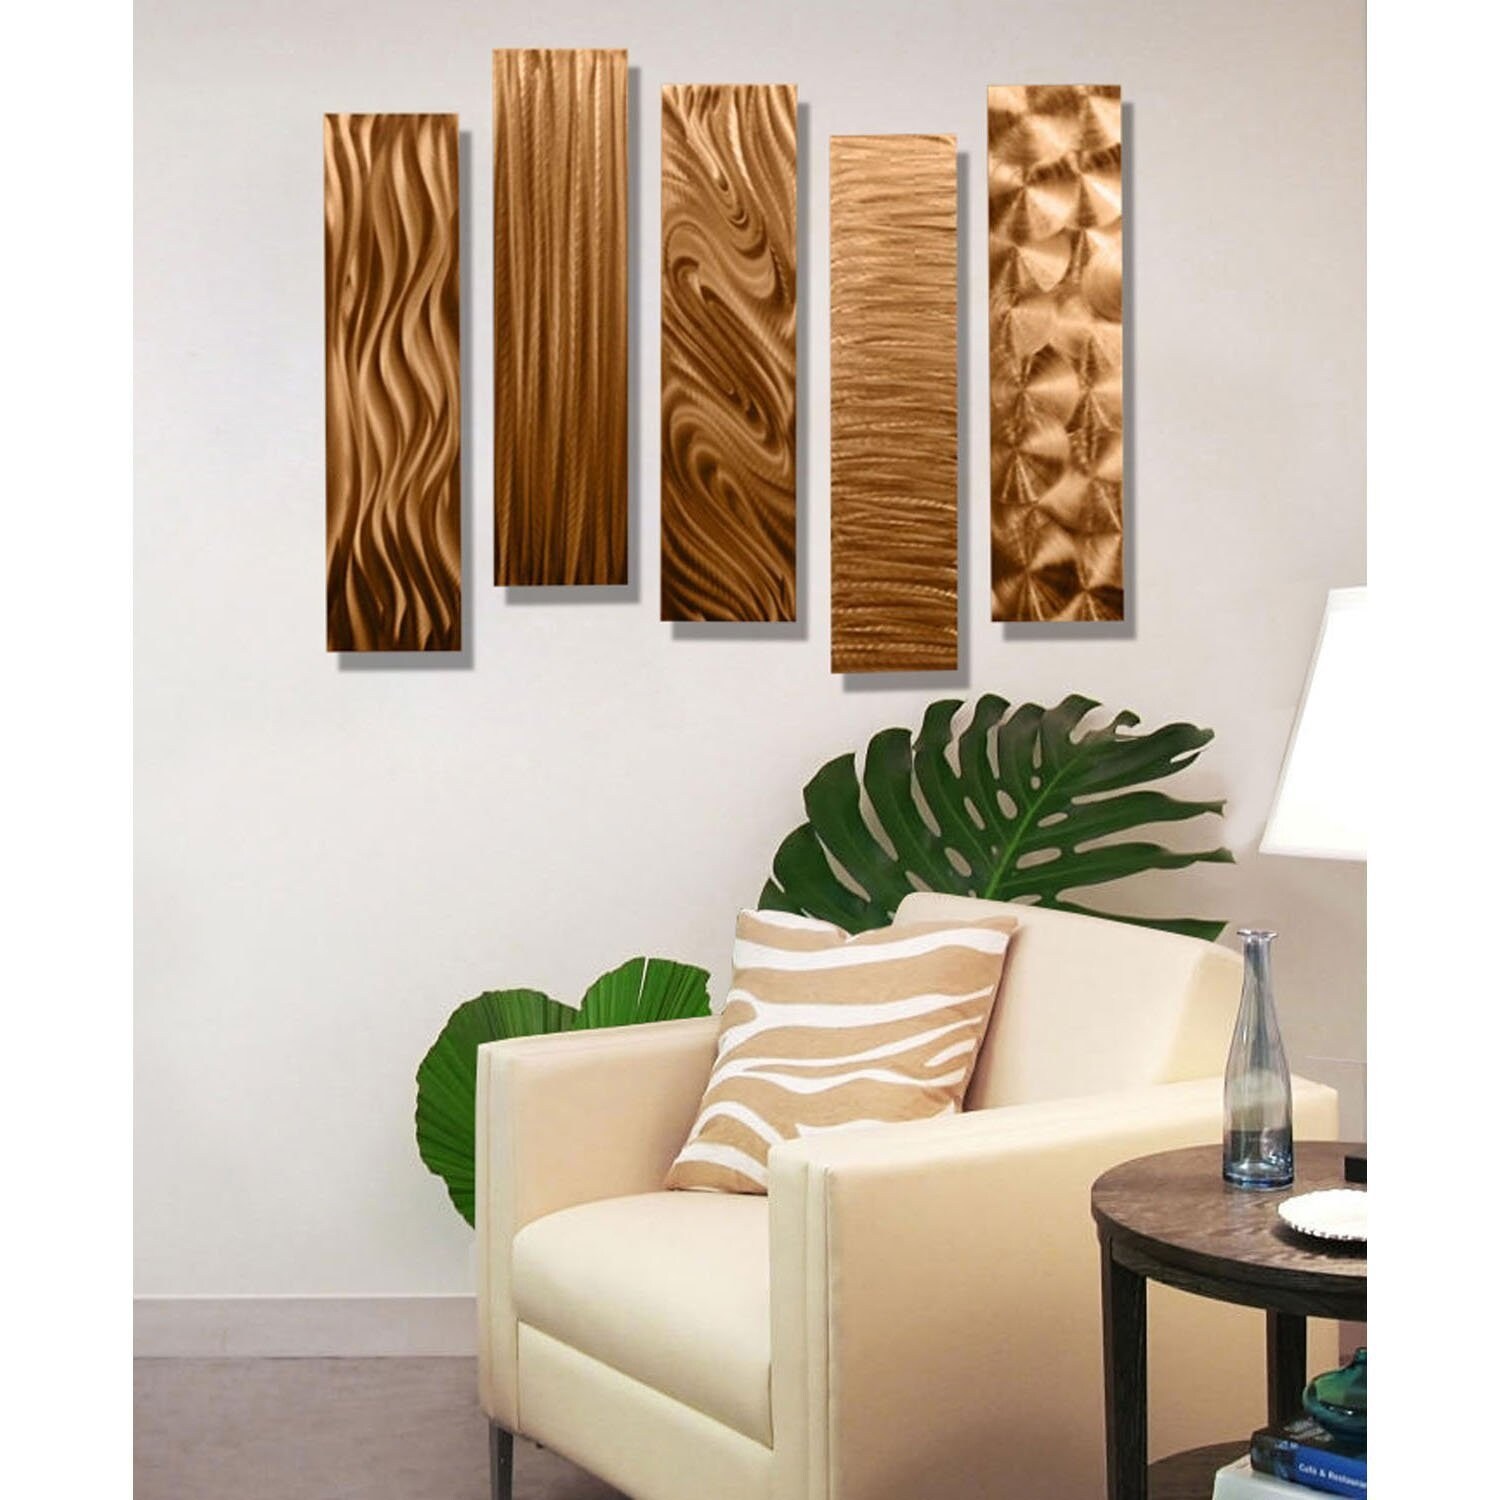 Statements2000 3D Metal Wall Art Accent Panels Modern Copper Decor by Jon  Allen (Set of 5) - 5 Easy Pieces Copper